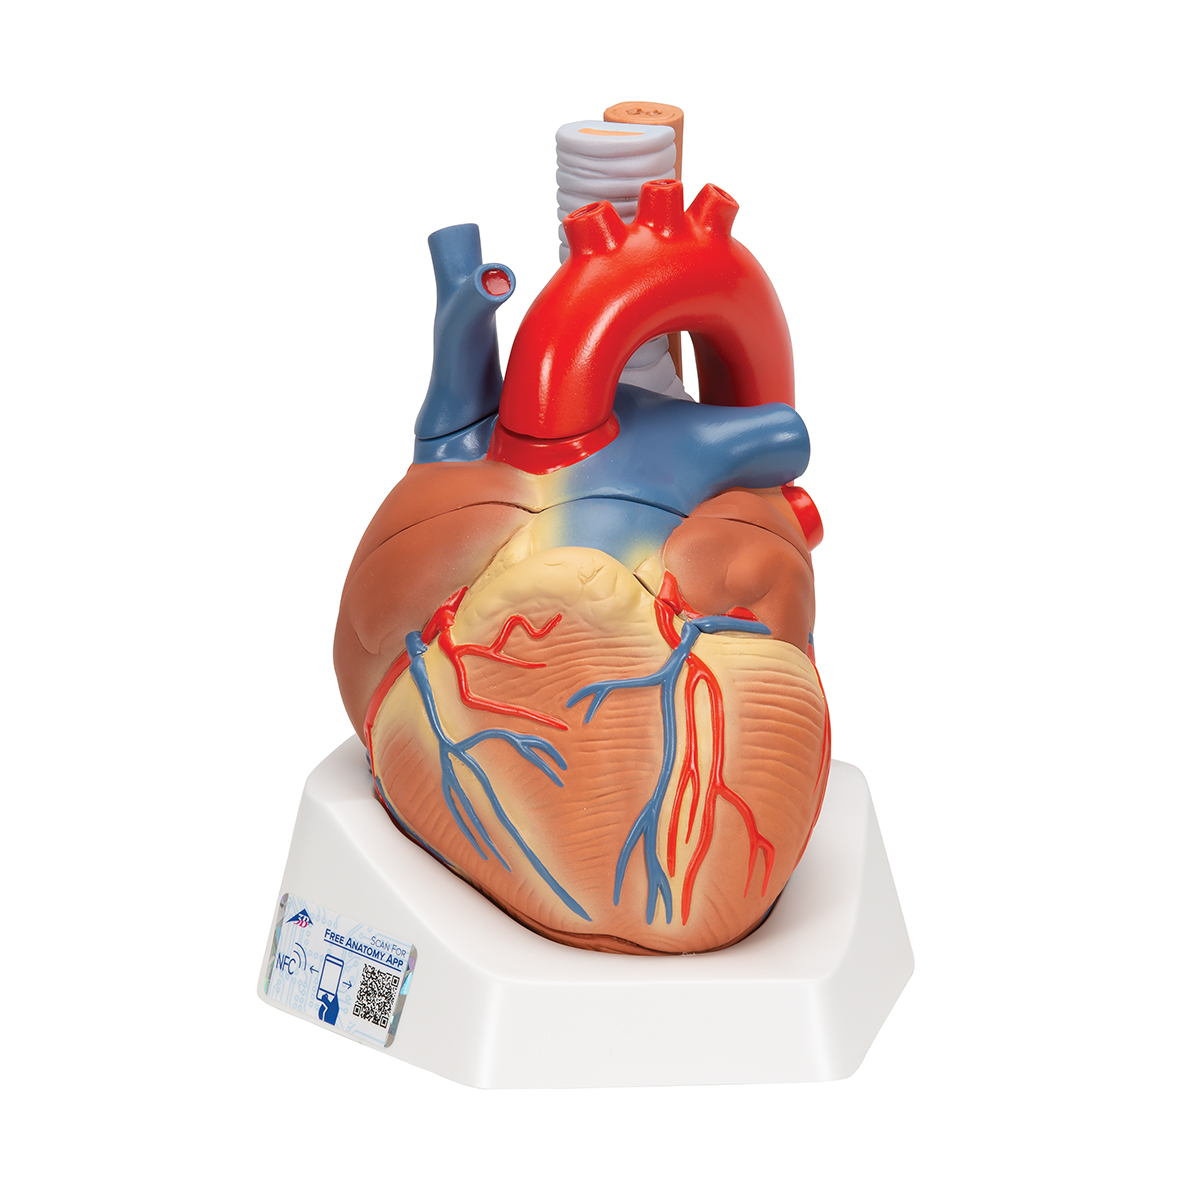 Anatomical Heart Model Anatomy Of The Heart 7 Part Heart Model